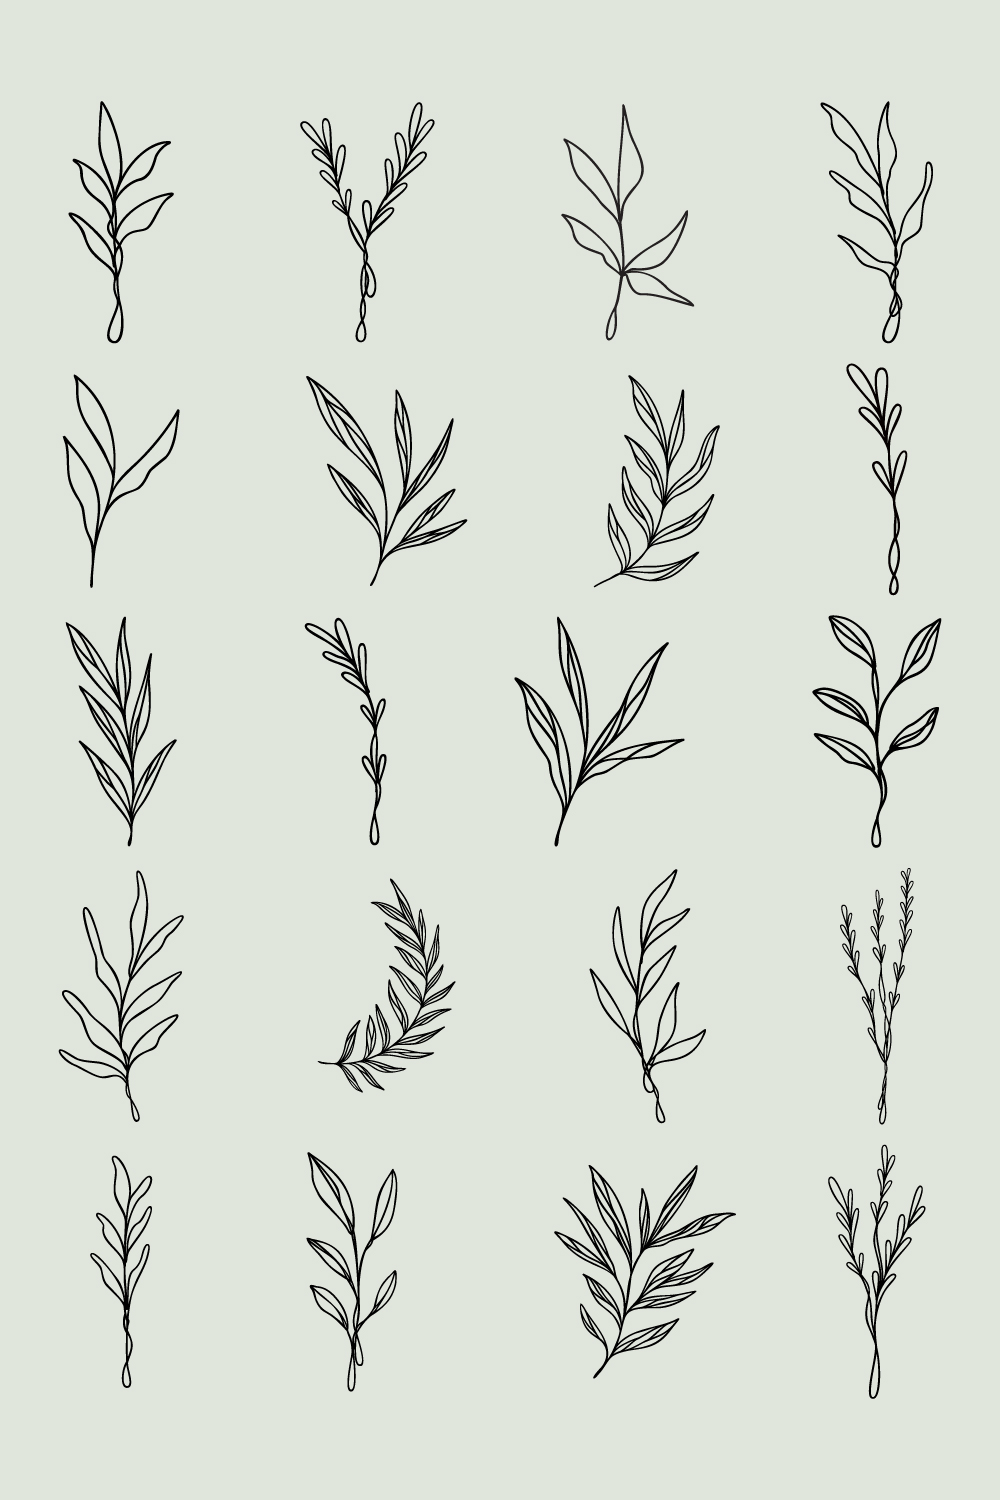 Leaf Line Art Bundle | Set Of 20 Drawn Leaves | Botanical Vector Illustrations | Decorative Foliage Designs | Leafy Nature Plant Artwork pinterest preview image.